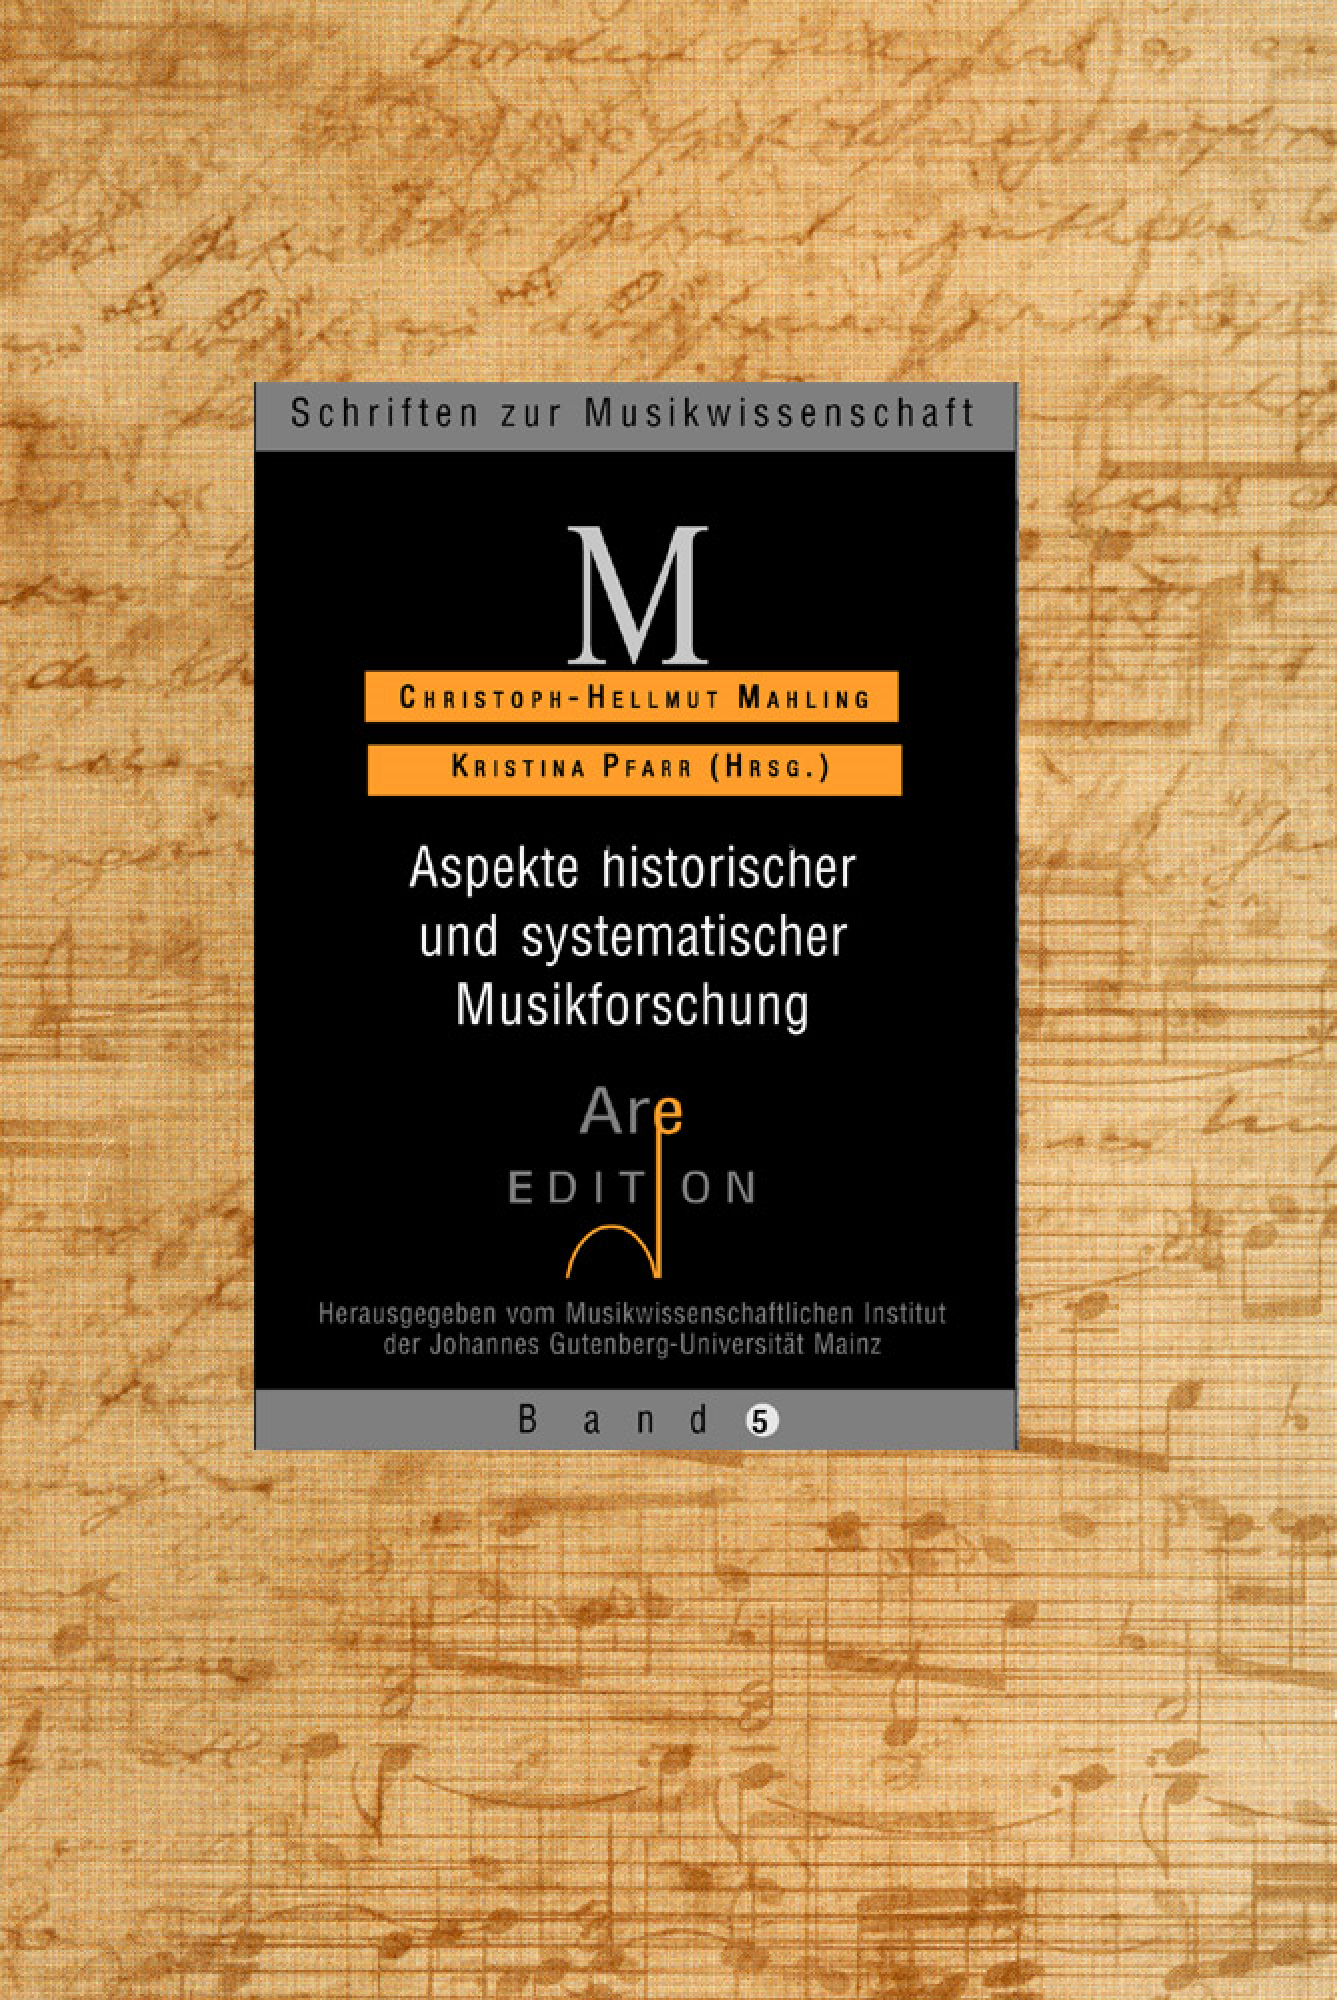 Mahling, Chr.-Hellmut / Pfarr, Kristina (Hrsg): Aspekte historischer und systematischer Musikforschung.